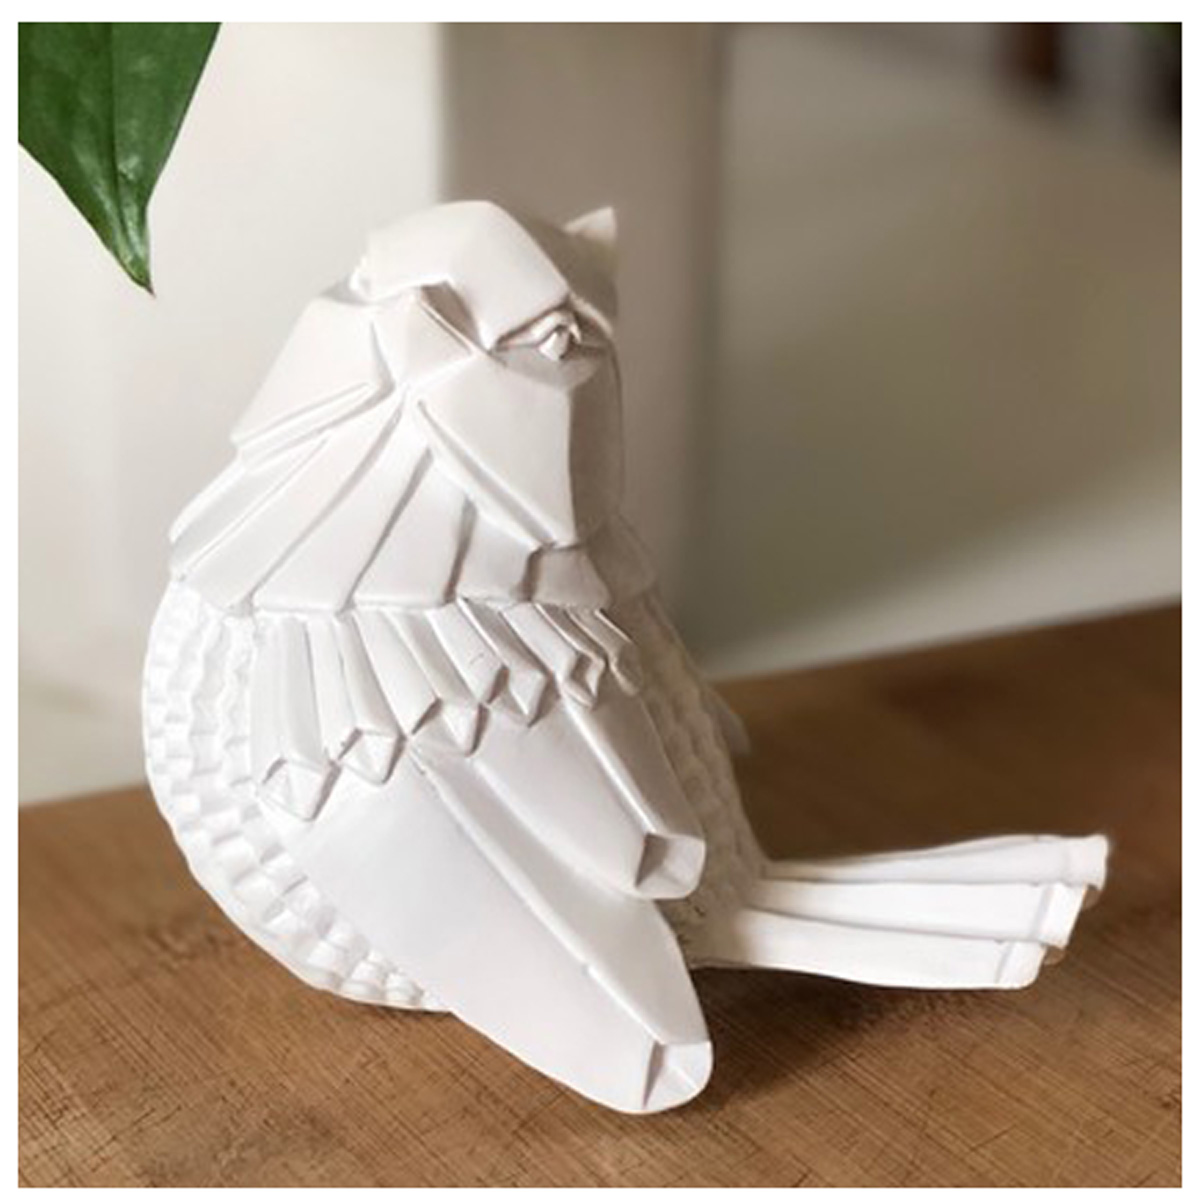 Figurine 3D résine \'Origami\' blanc (oiseau) - 10 cm - [A0629]